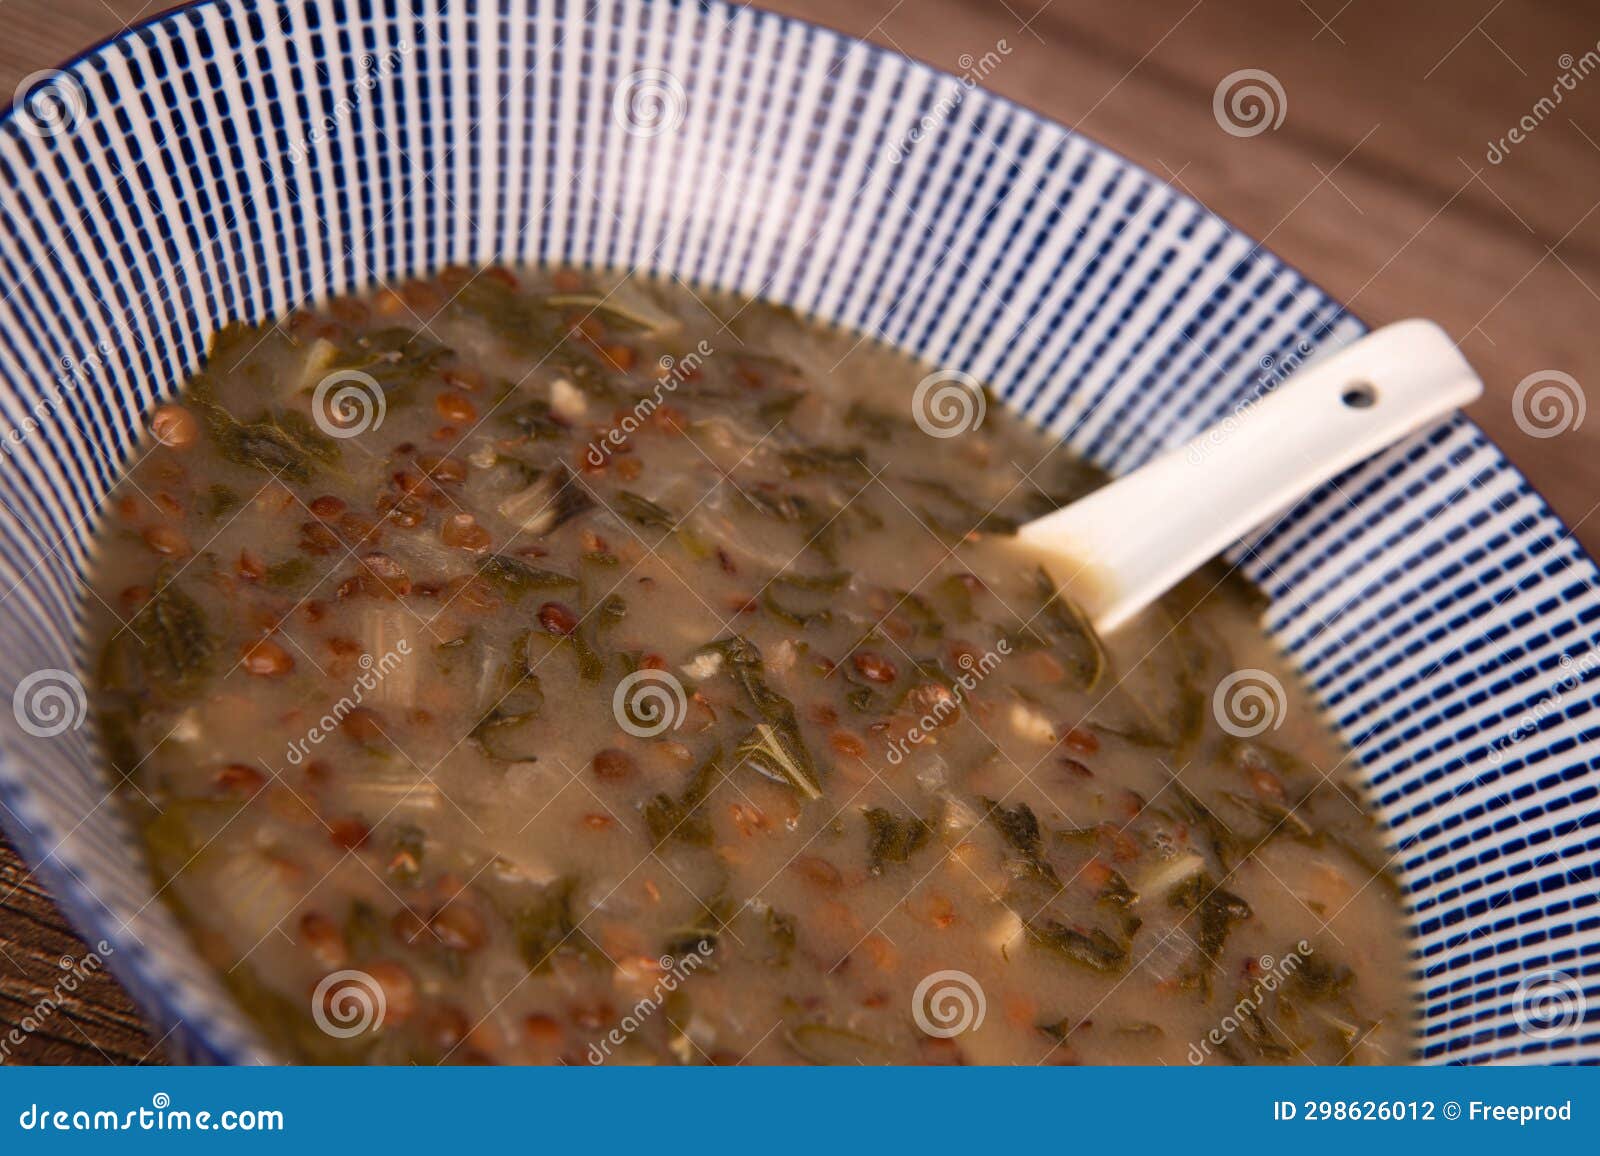 lebanese recipe for chard soup, lentils with lemon, adas bi hamoud